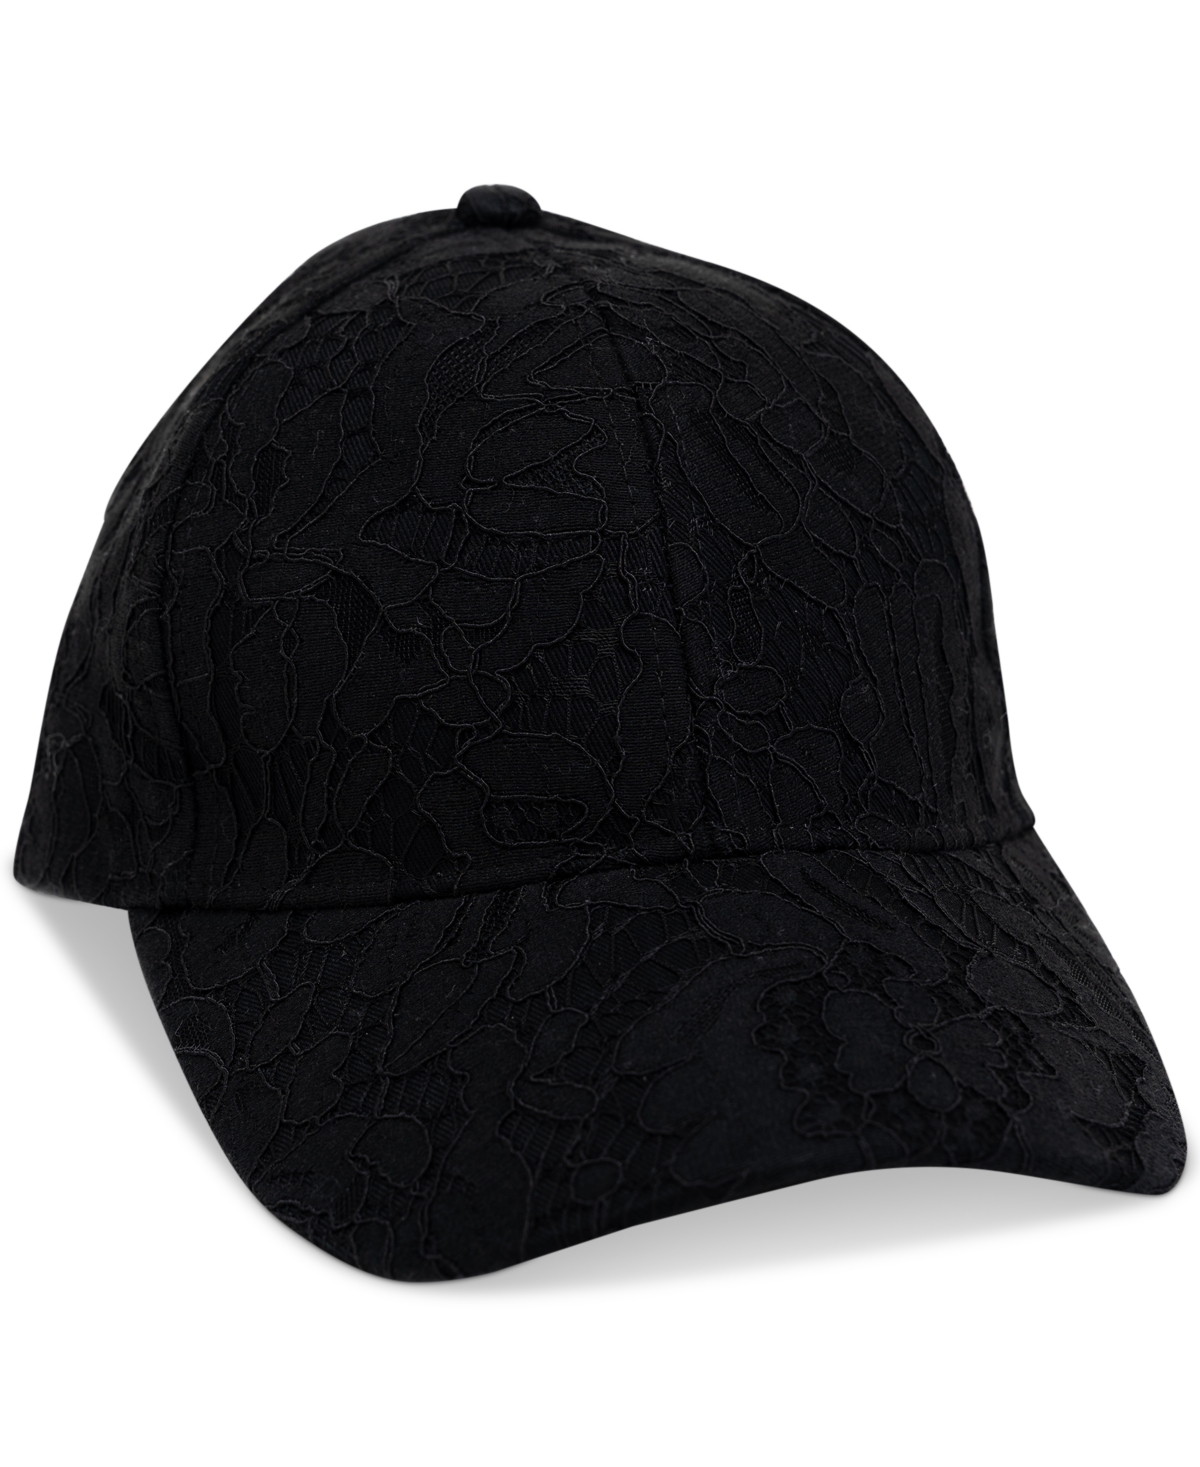 Women's Lace Baseball Cap - Black